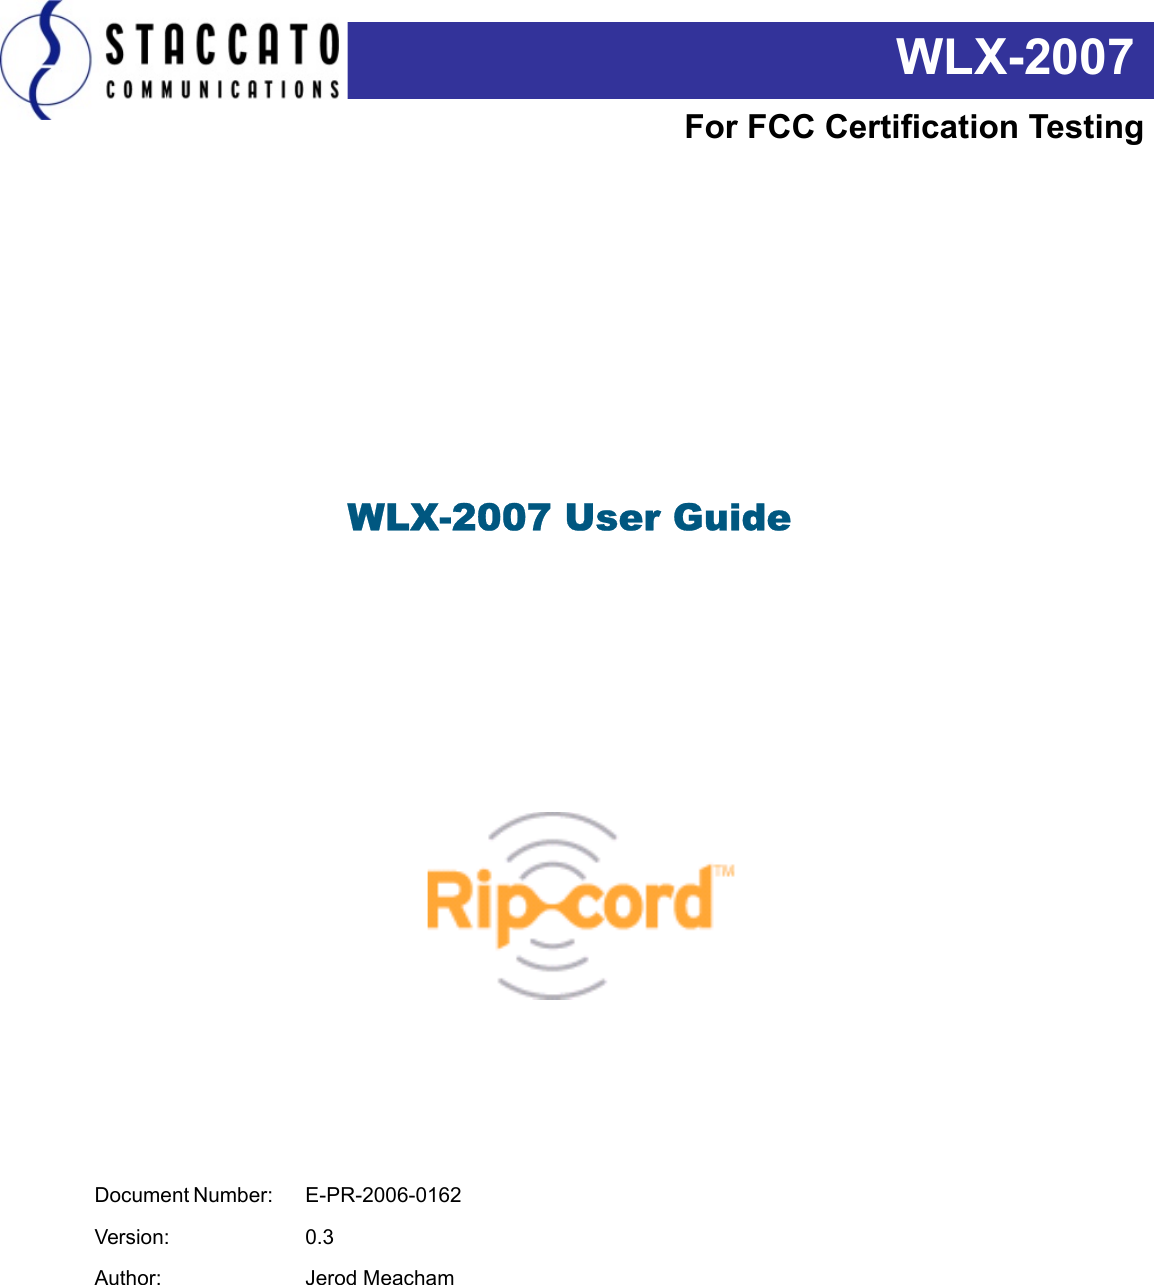     WLX-2007 User Guide Document Number:   E-PR-2006-0162Version: 0.3Author: Jerod Meacham WLX-2007For FCC Certification Testing